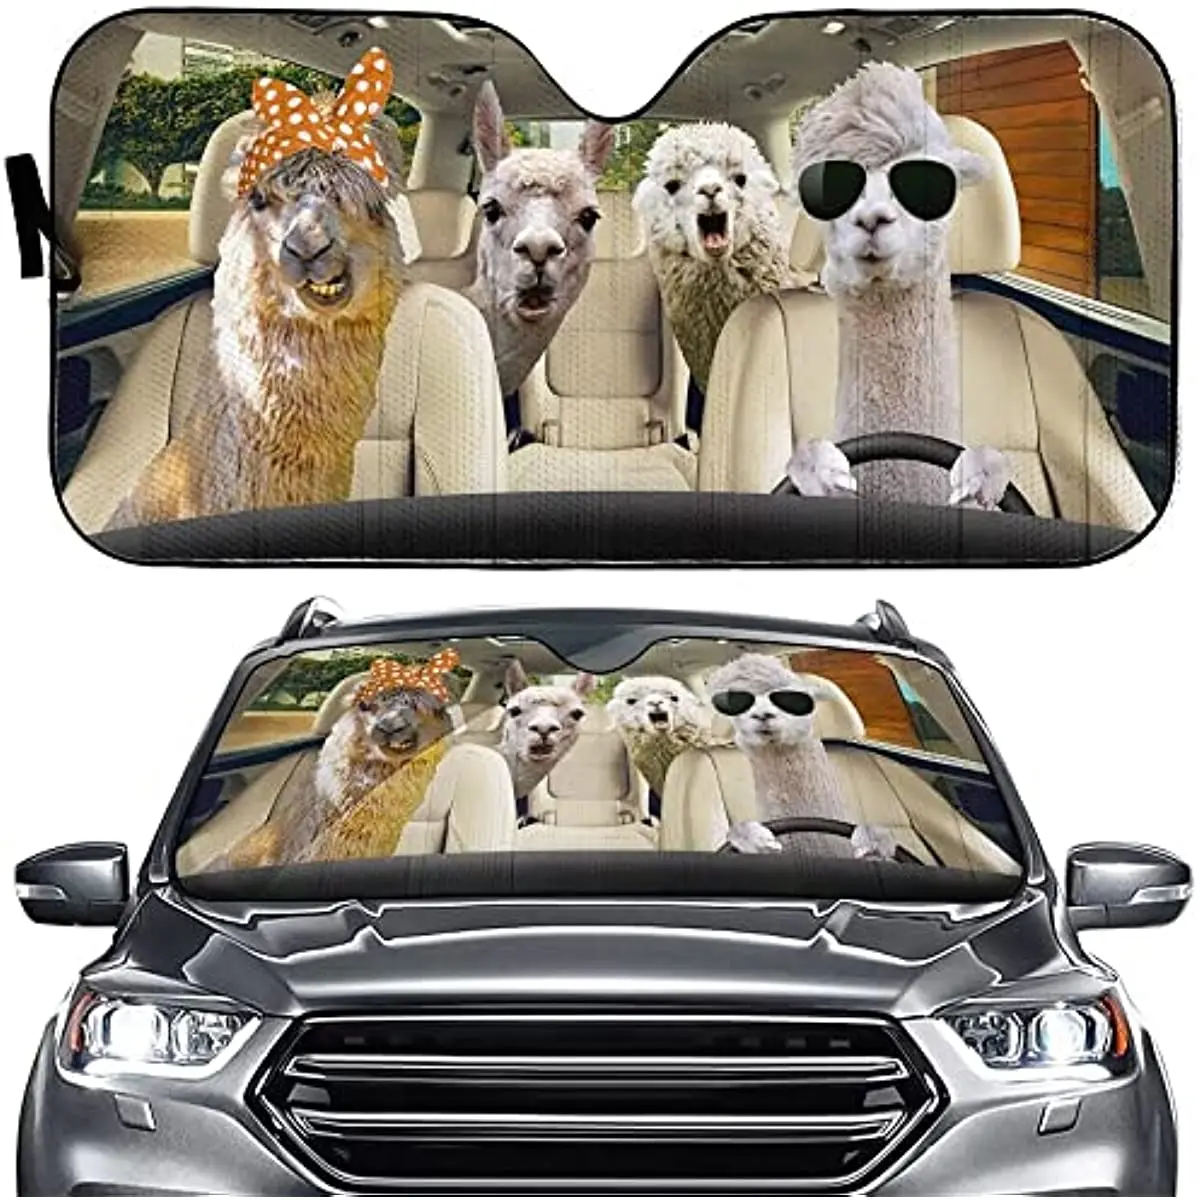 

Llama Driving Car Front Window Cover,Family Llama Go Shopping Auto Sun Shade,Funny Farmhouse Animal Foldable Truck Sun Visor,Aut